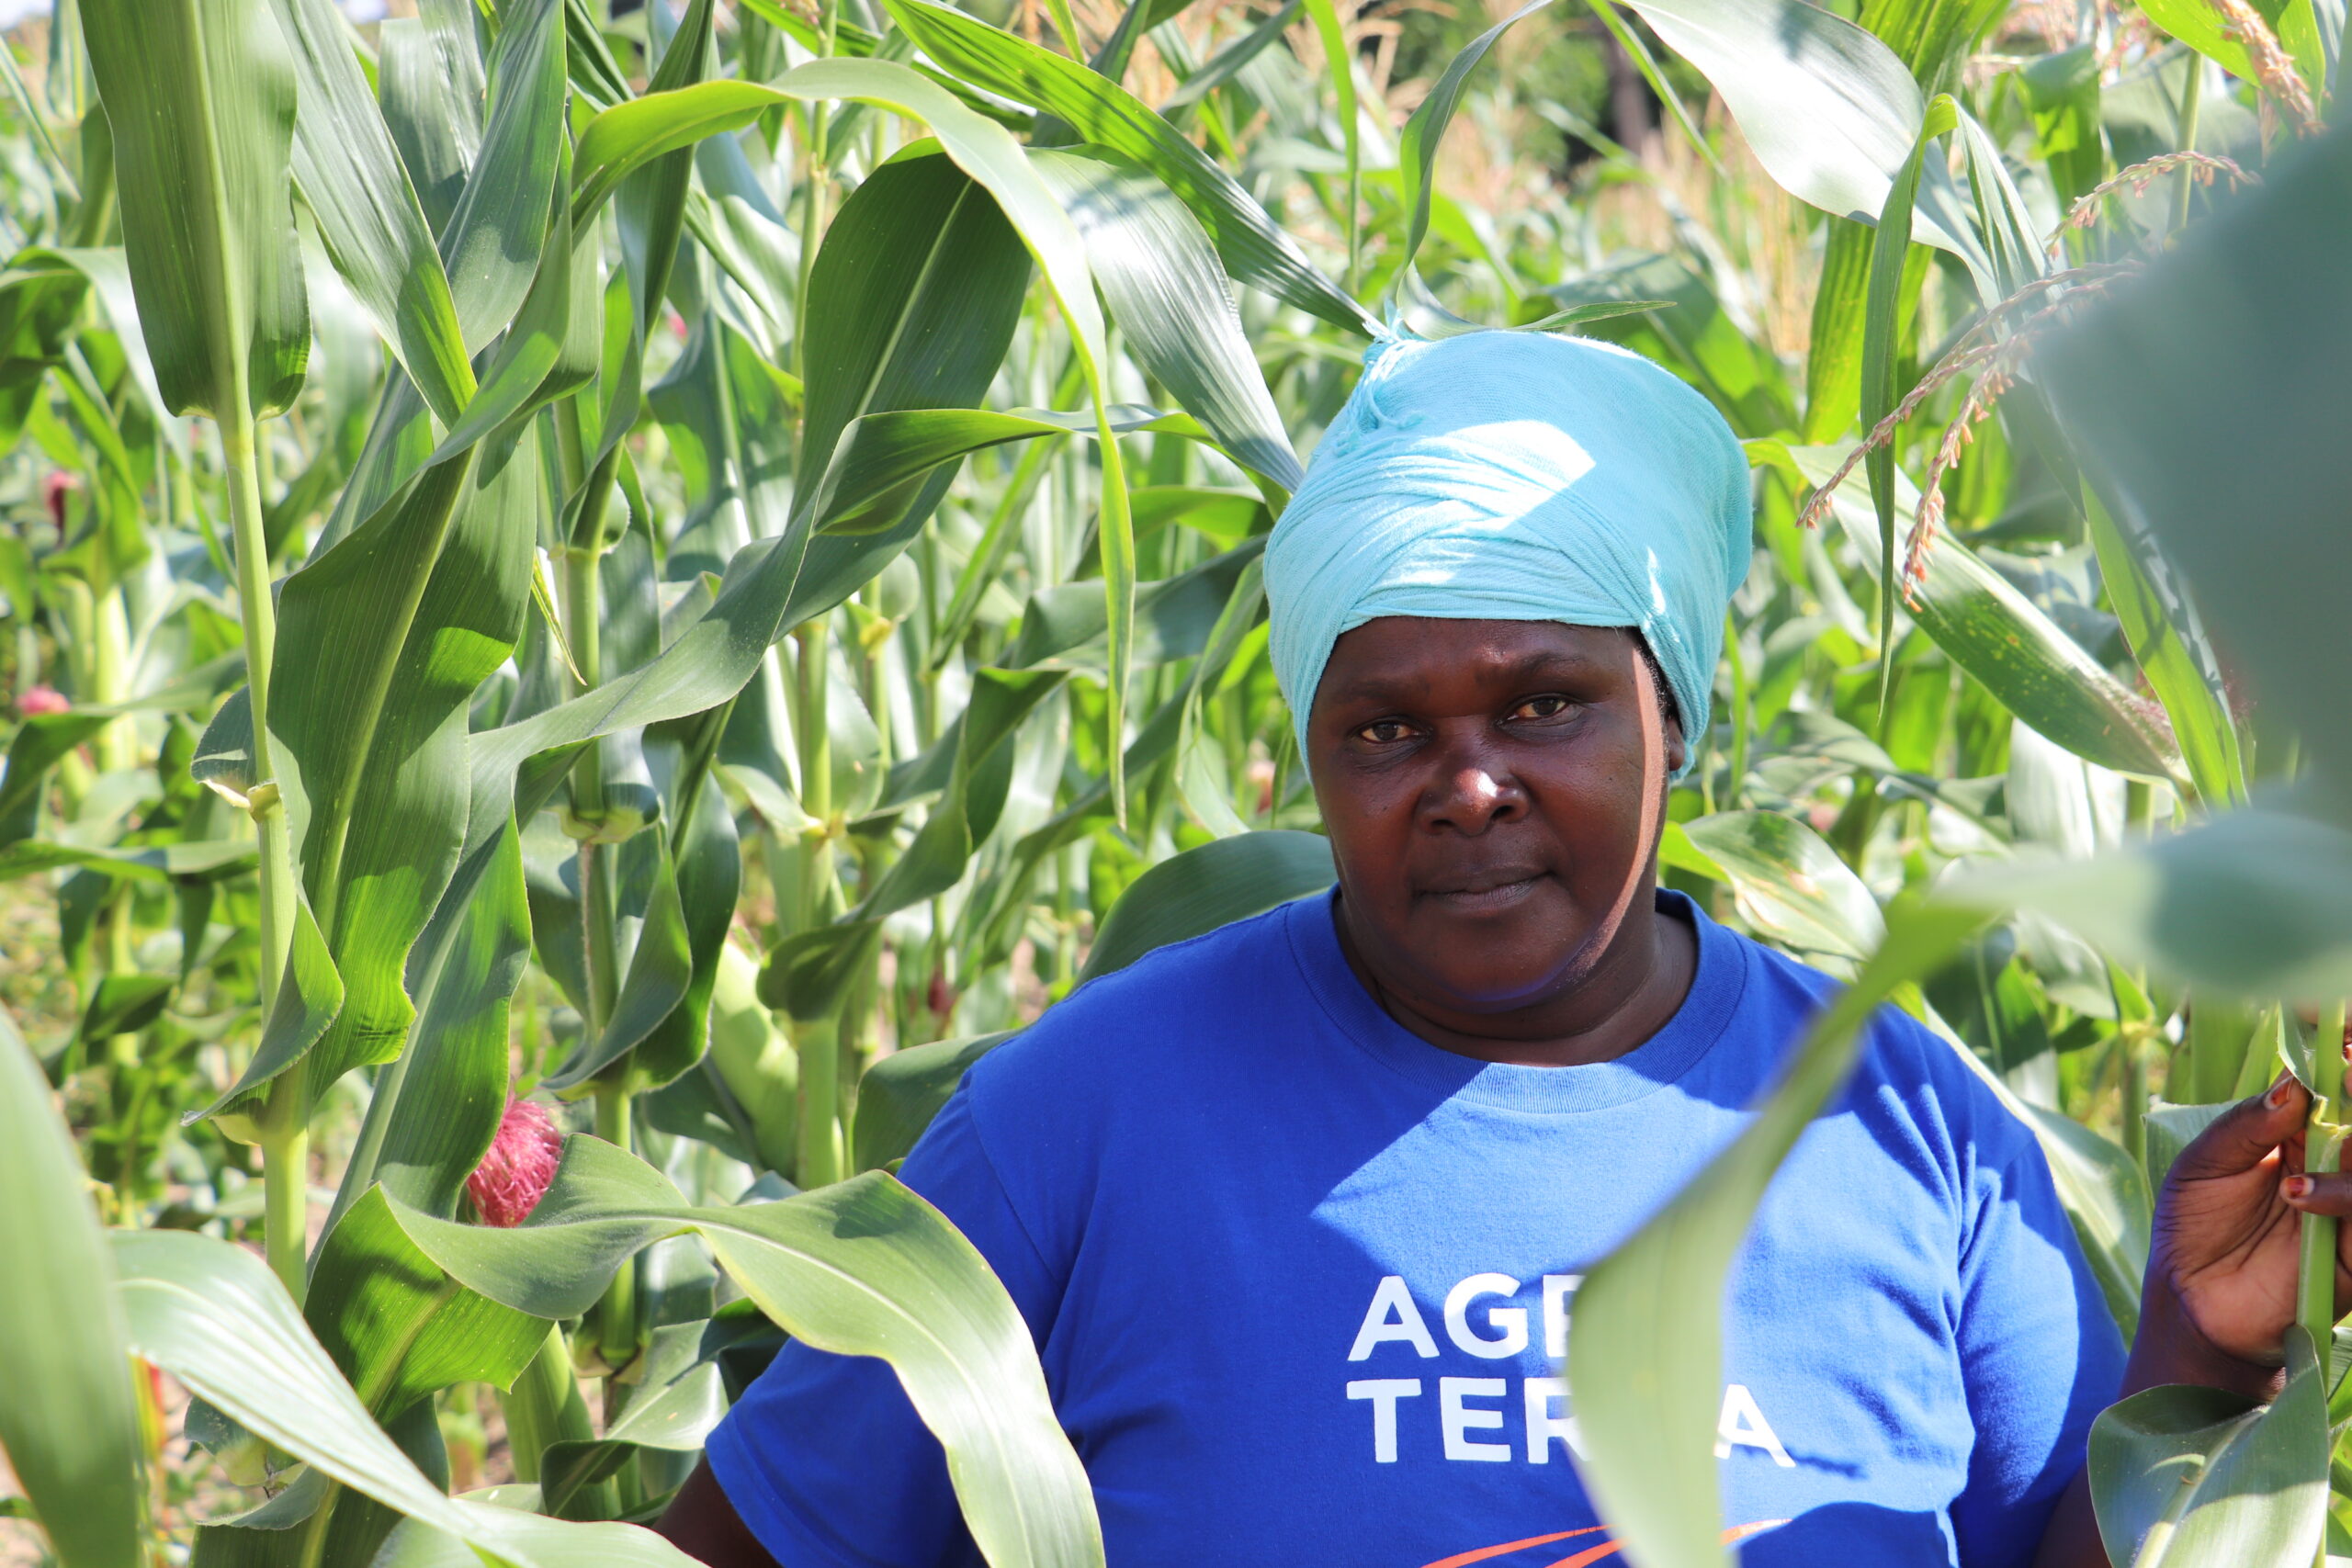 Farming-Specific Loans Help Tanzania's Smallholders Increase Productivity